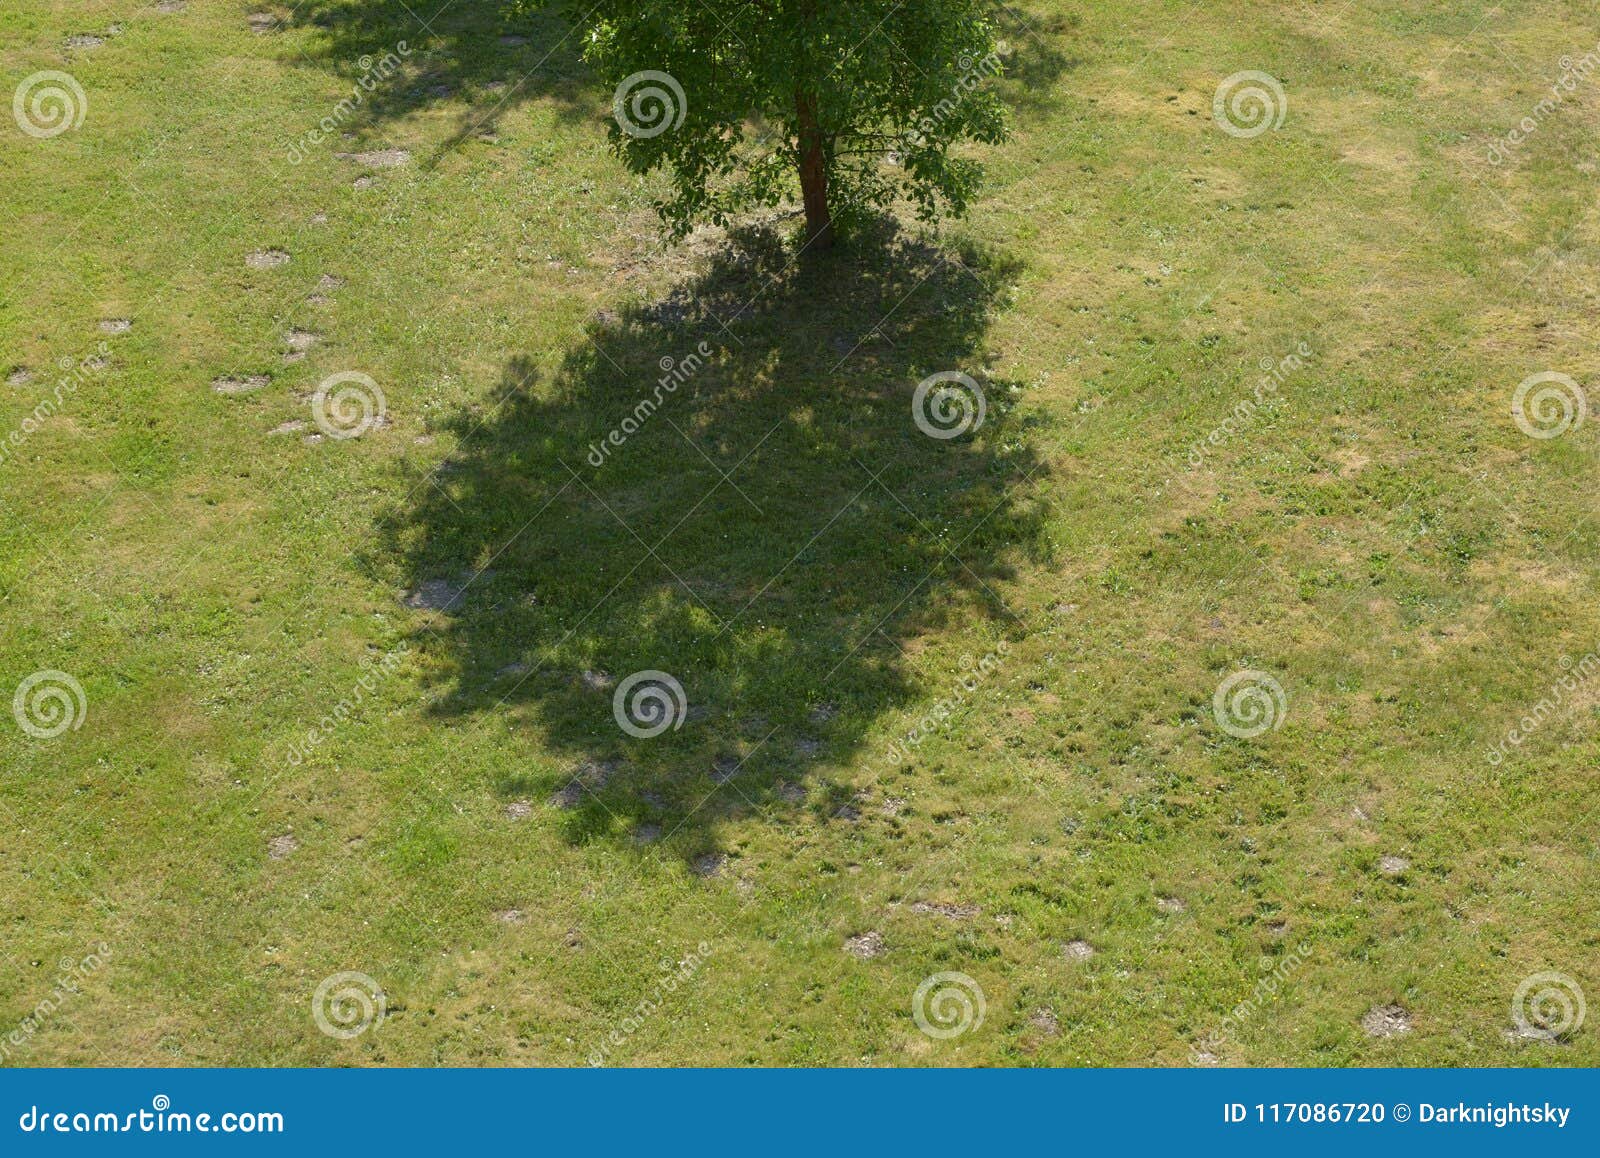 wild single domesticated apple tree on green grass